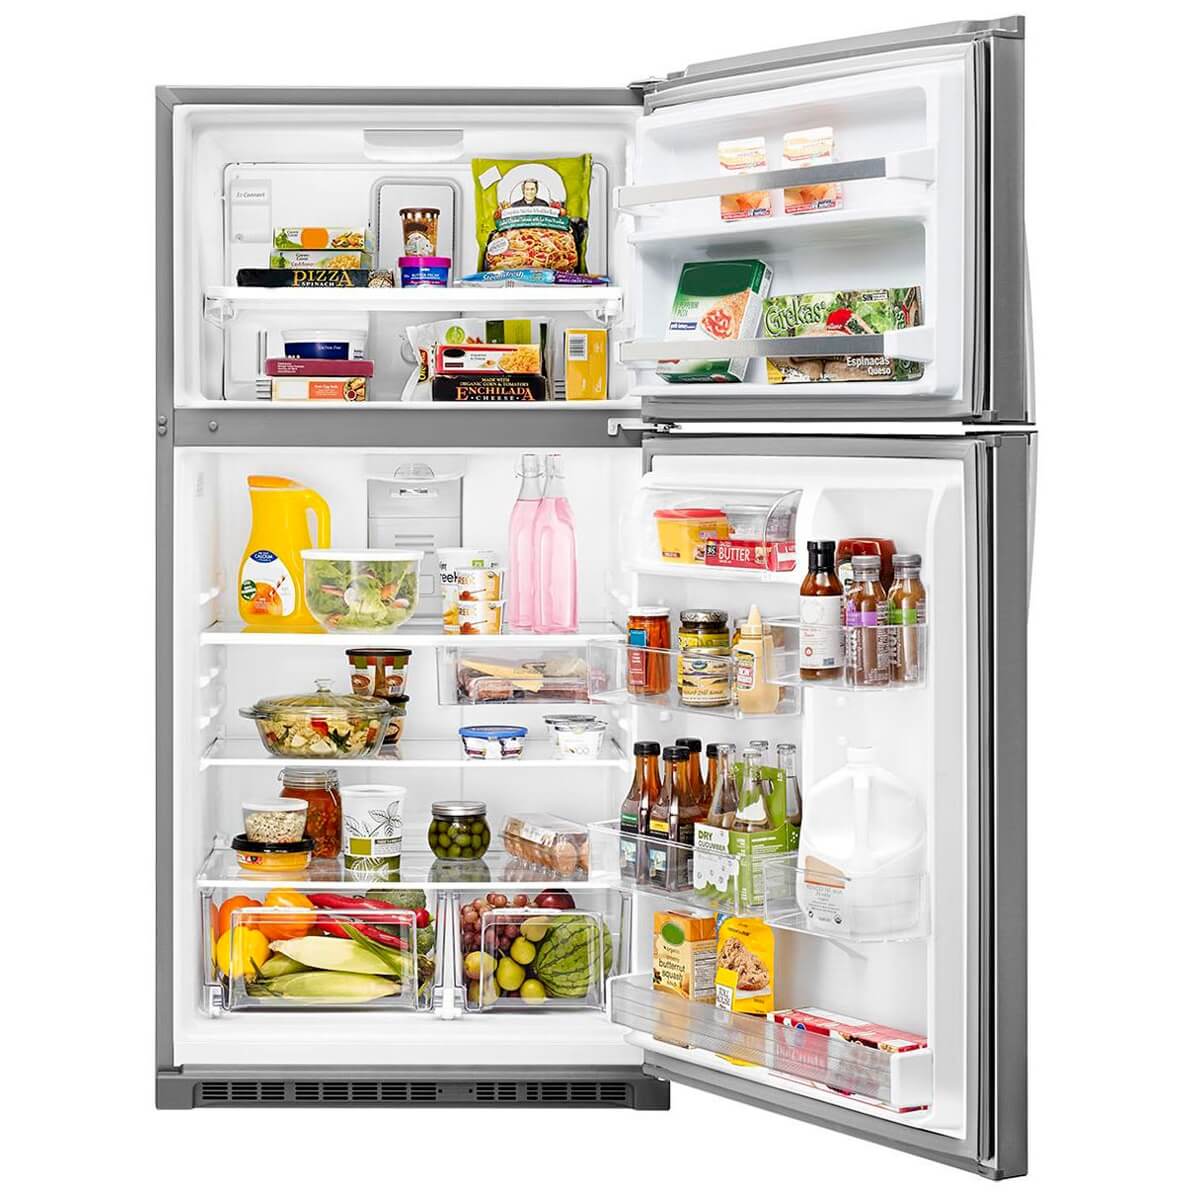 Refrigerador Whirlpool 21p3 Blanco WT2150S